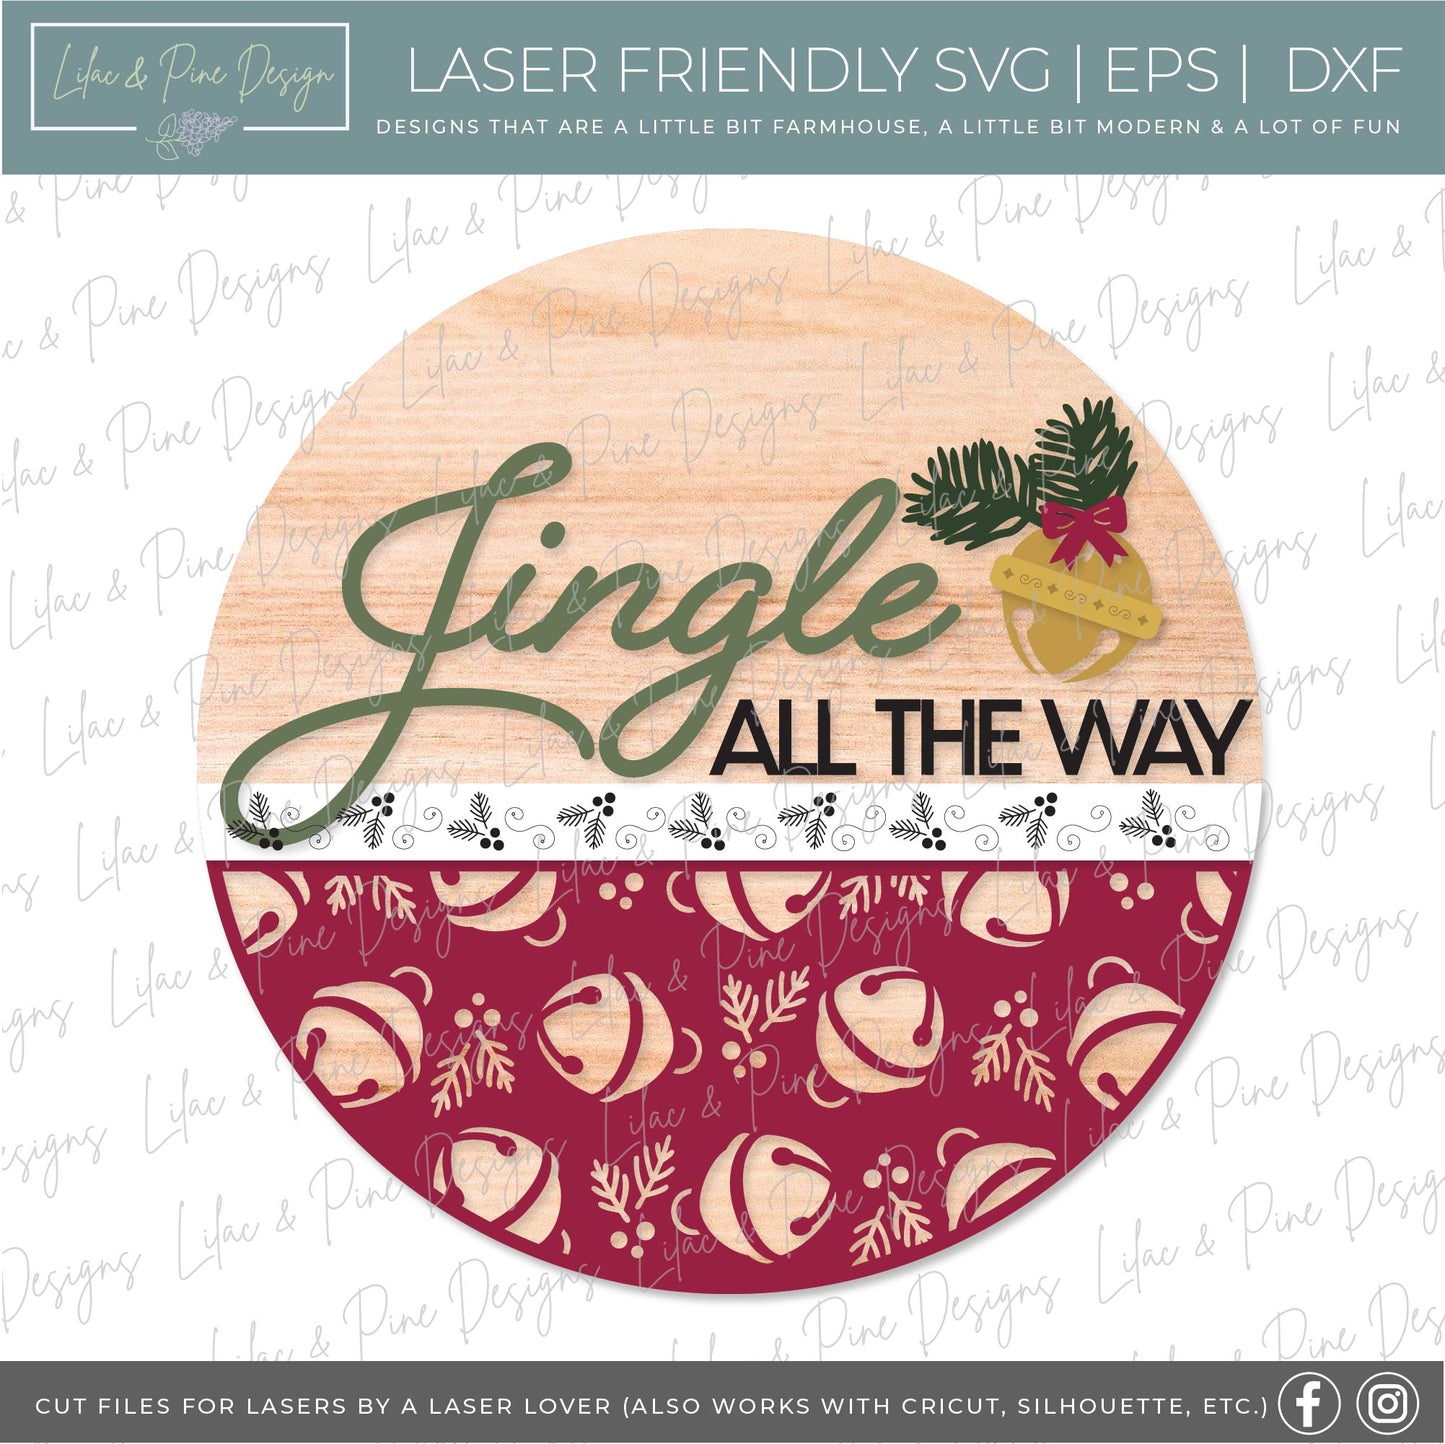 Lilac and Pine Catalog - Volume 1 - 245 digital designs - laser SVG files - Glowforge